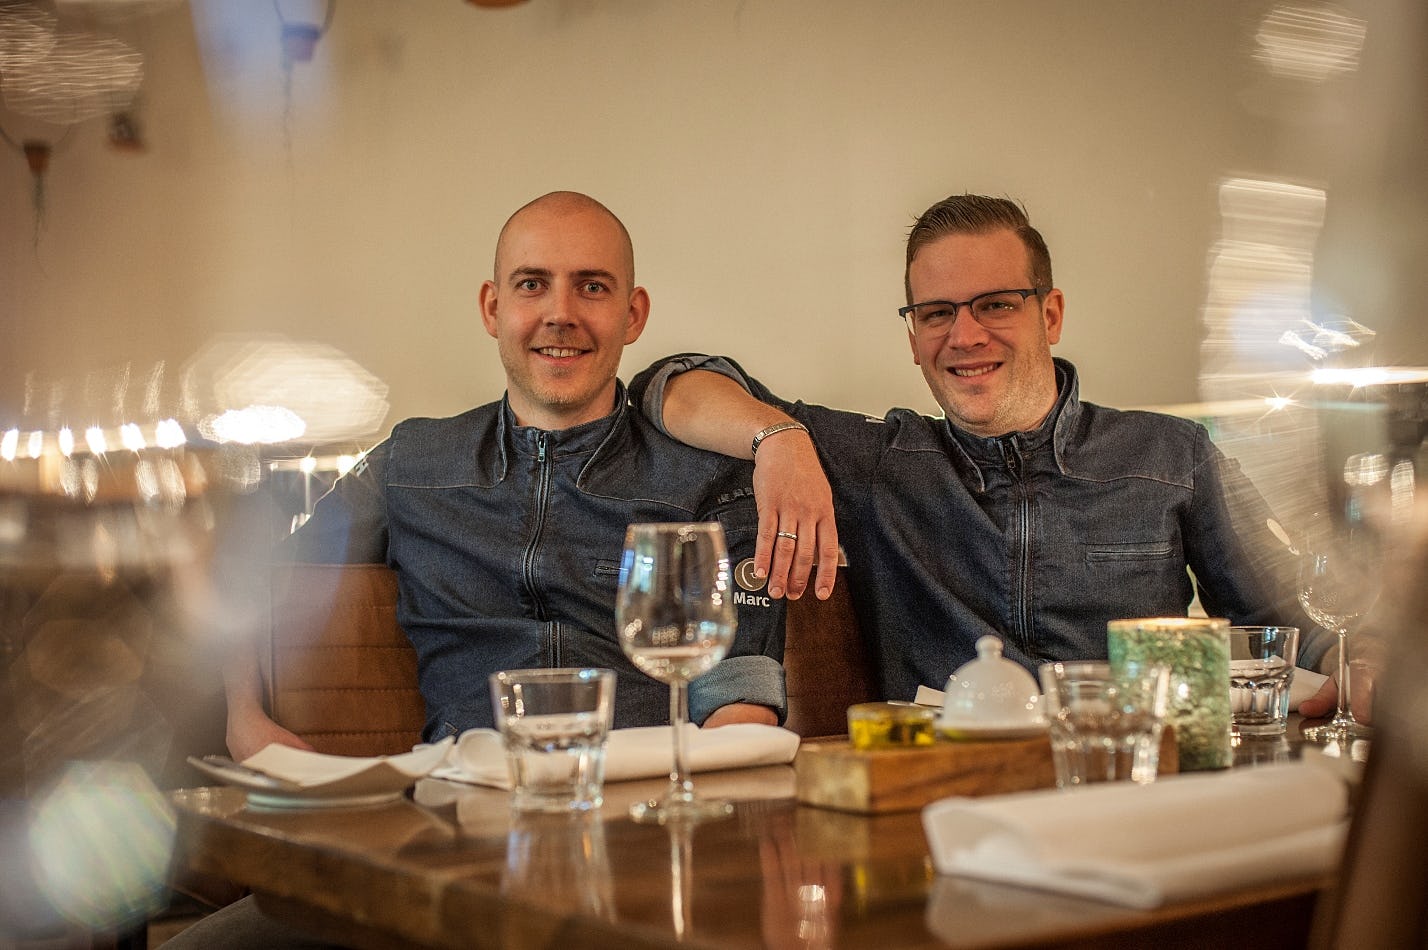 Zeeuwse koks Marc Everse en Niek Traas openen restaurant Kale & de Bril